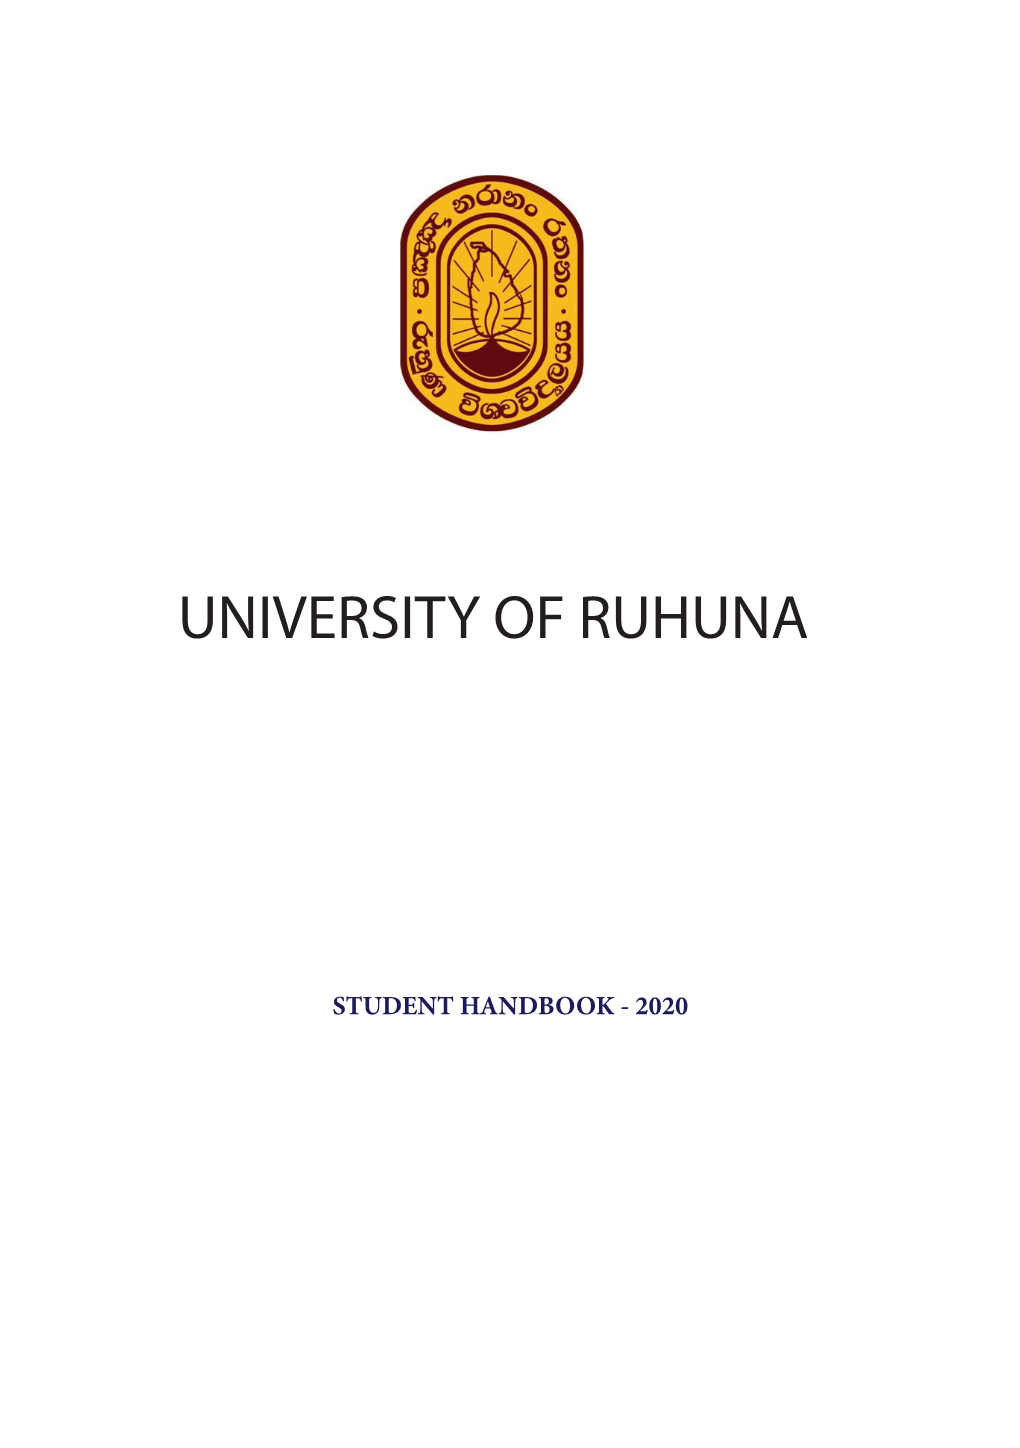 Student Handbook - 2020 University of Ruhuna